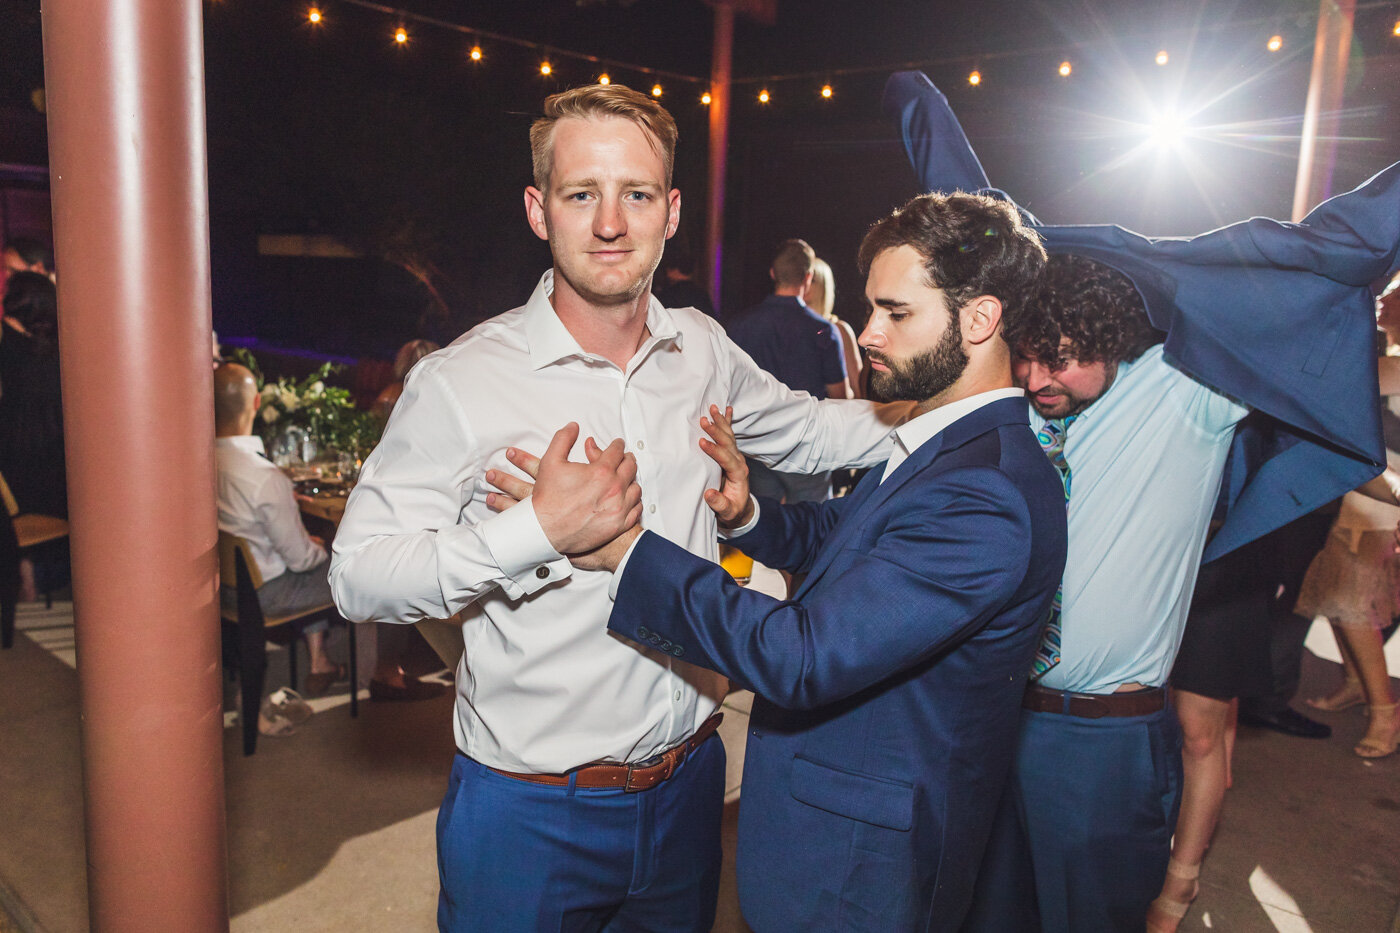 groom-having-fun-at-wedding-reception